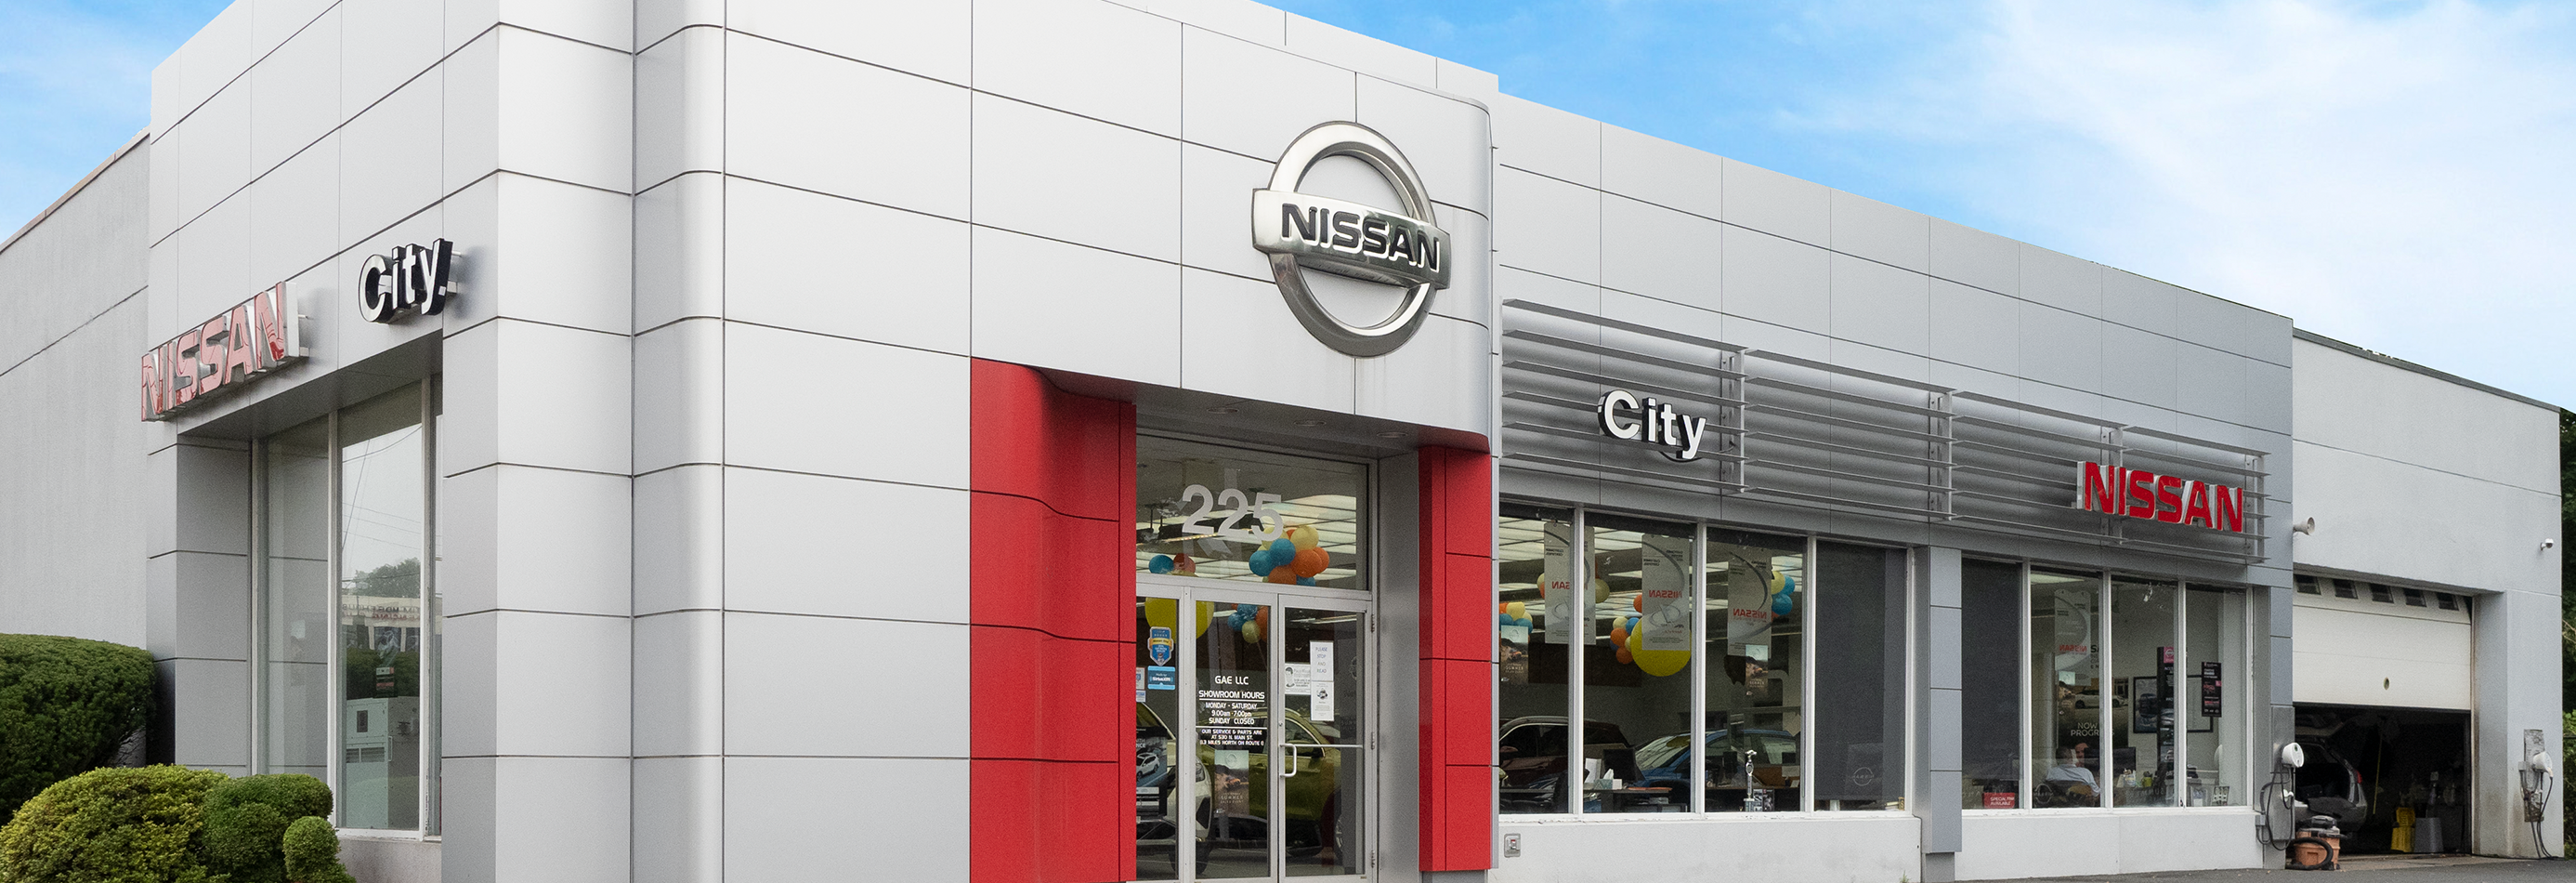 Nissan City serving Ossining NY